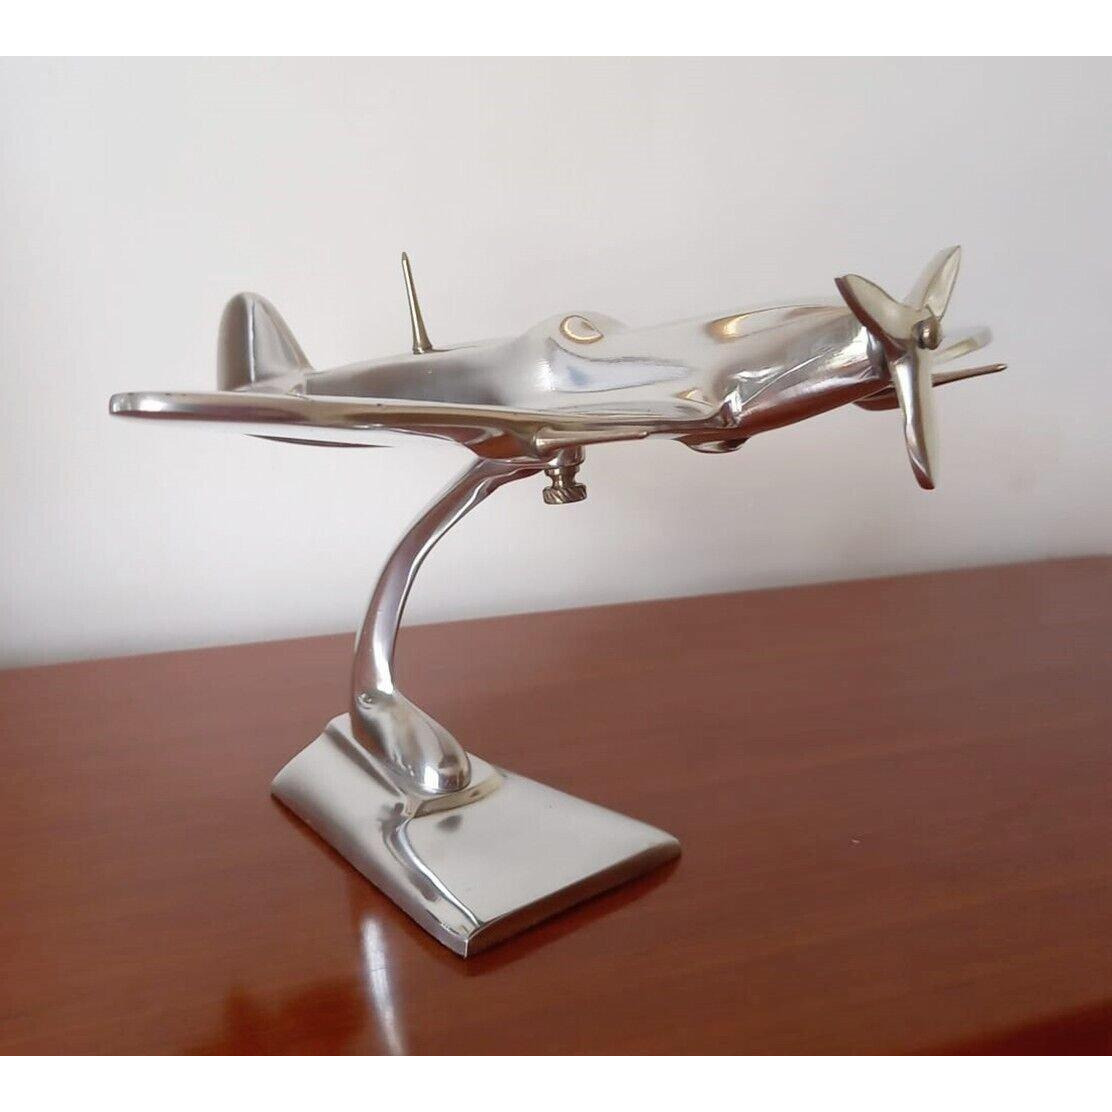 Spitfire Aeroplane Ornament Aluminium Plane Sculpture Gift - image 1